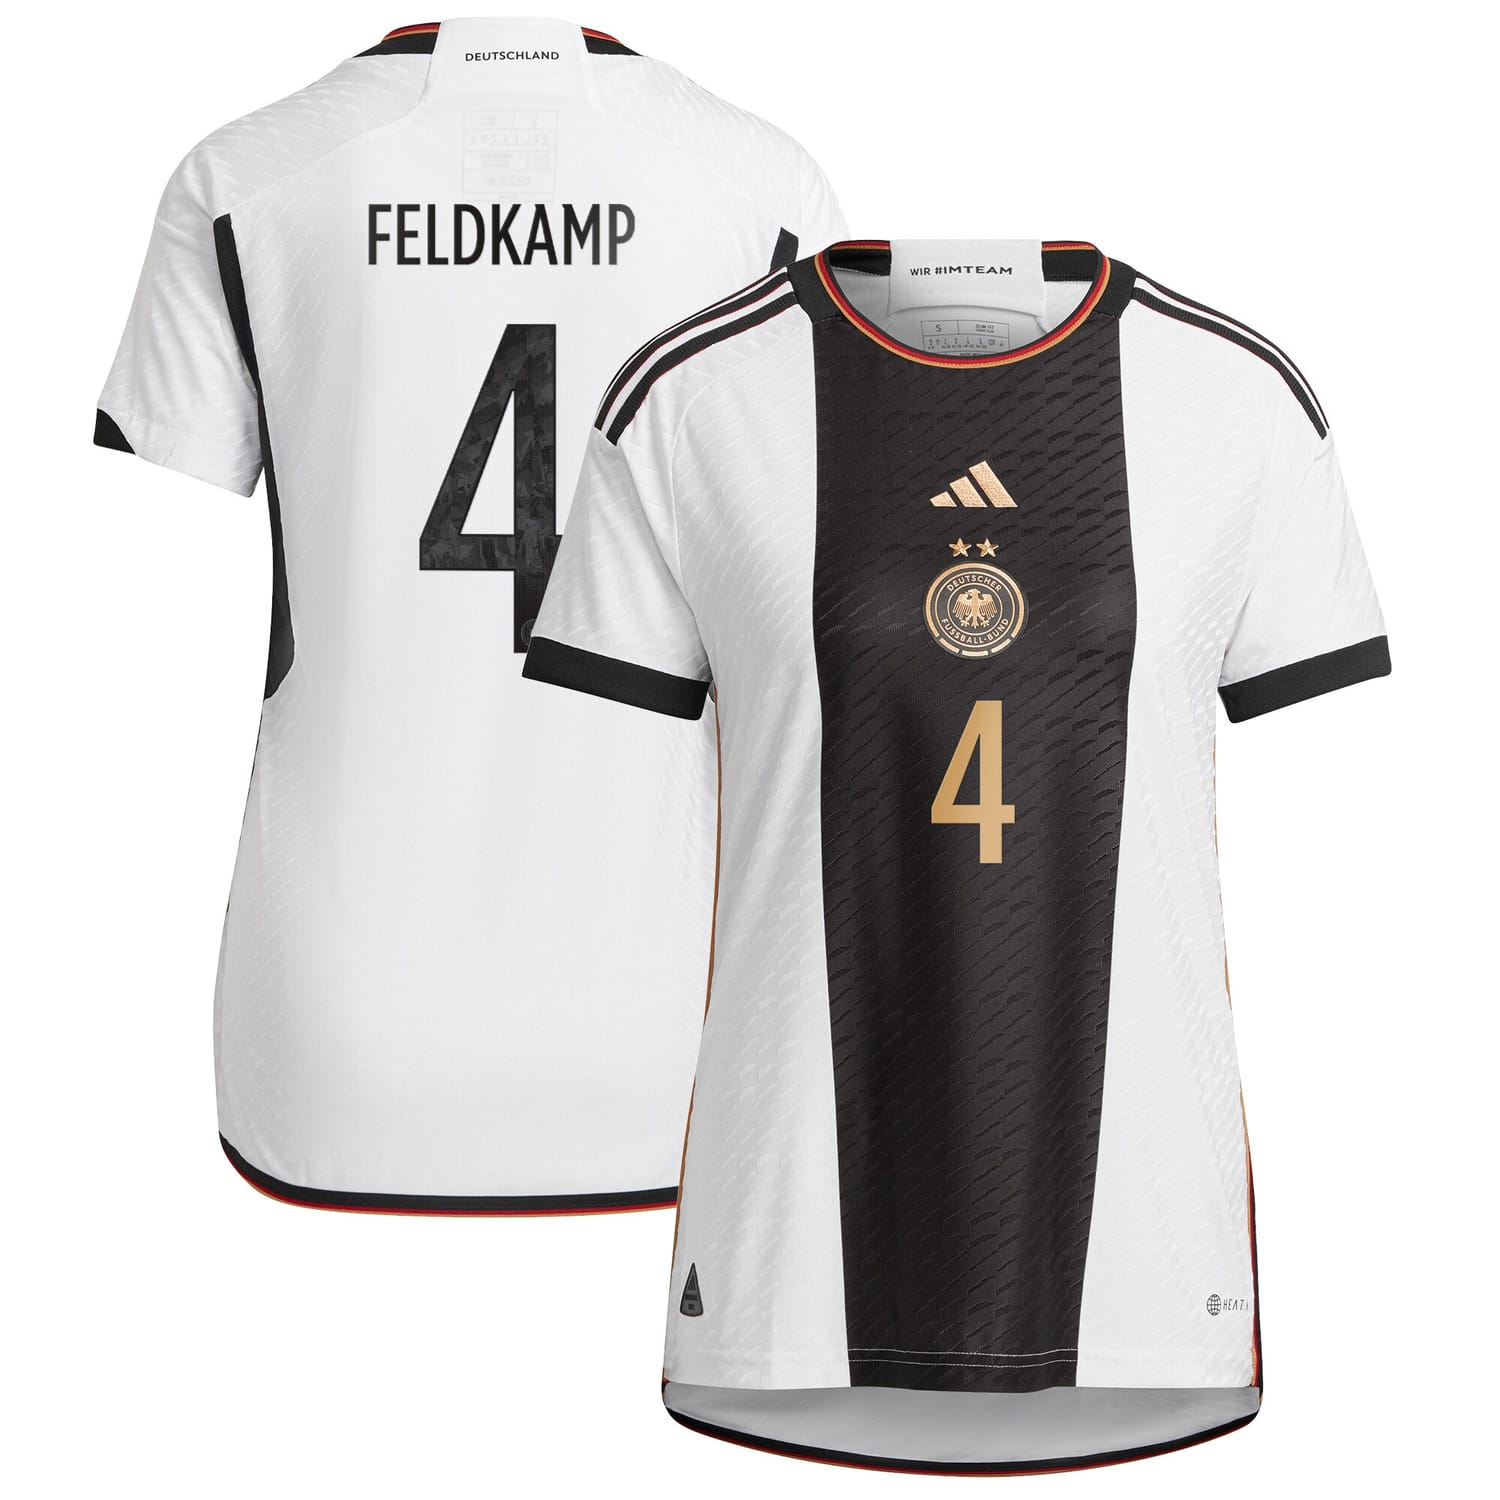 Germany National Team Home Authentic Jersey Shirt player Jana Feldkamp 4 printing for Women